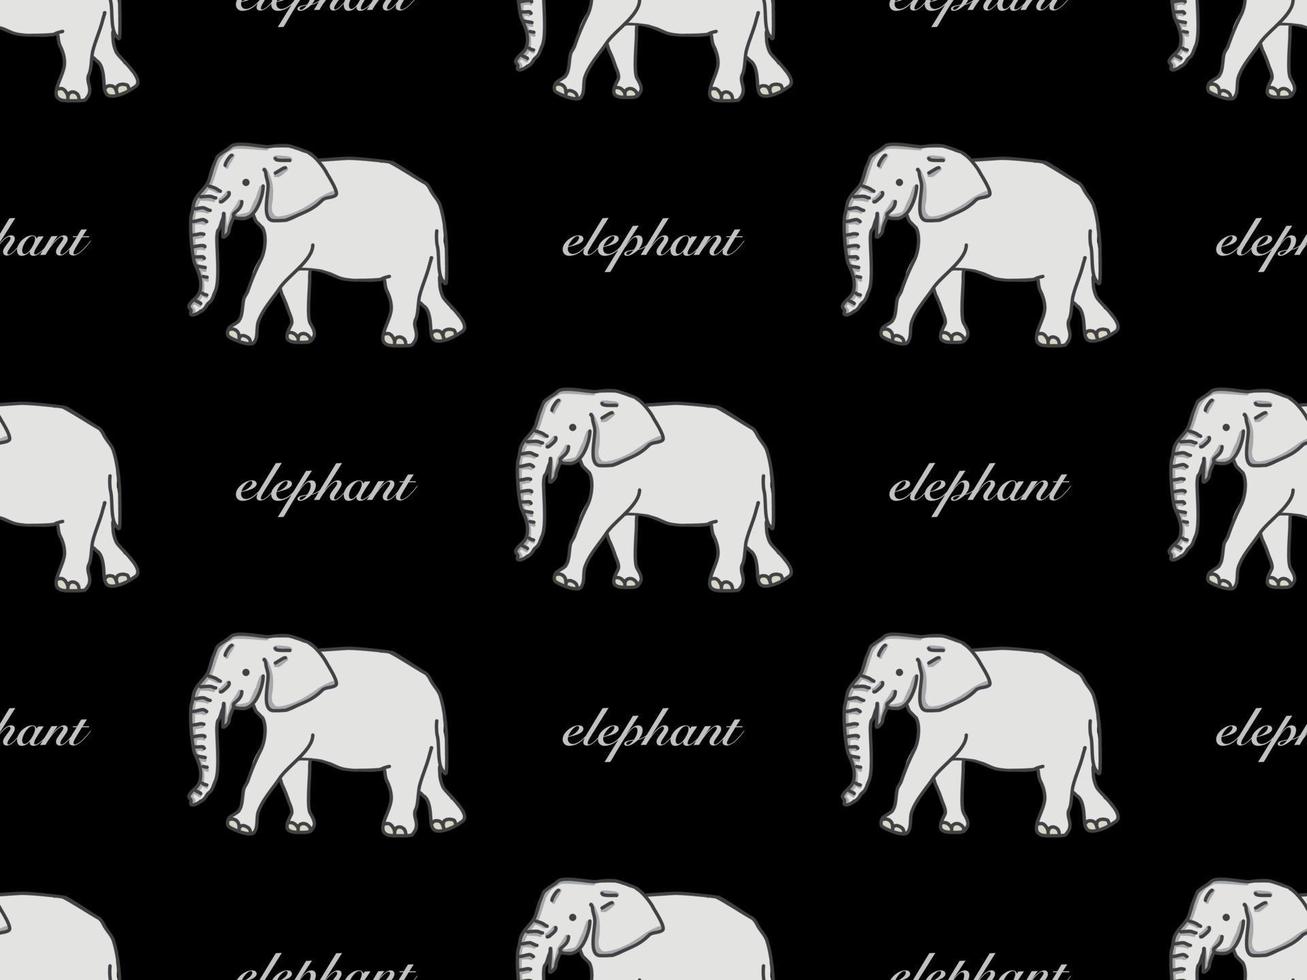 Elephant cartoon character seamless pattern on black background vector